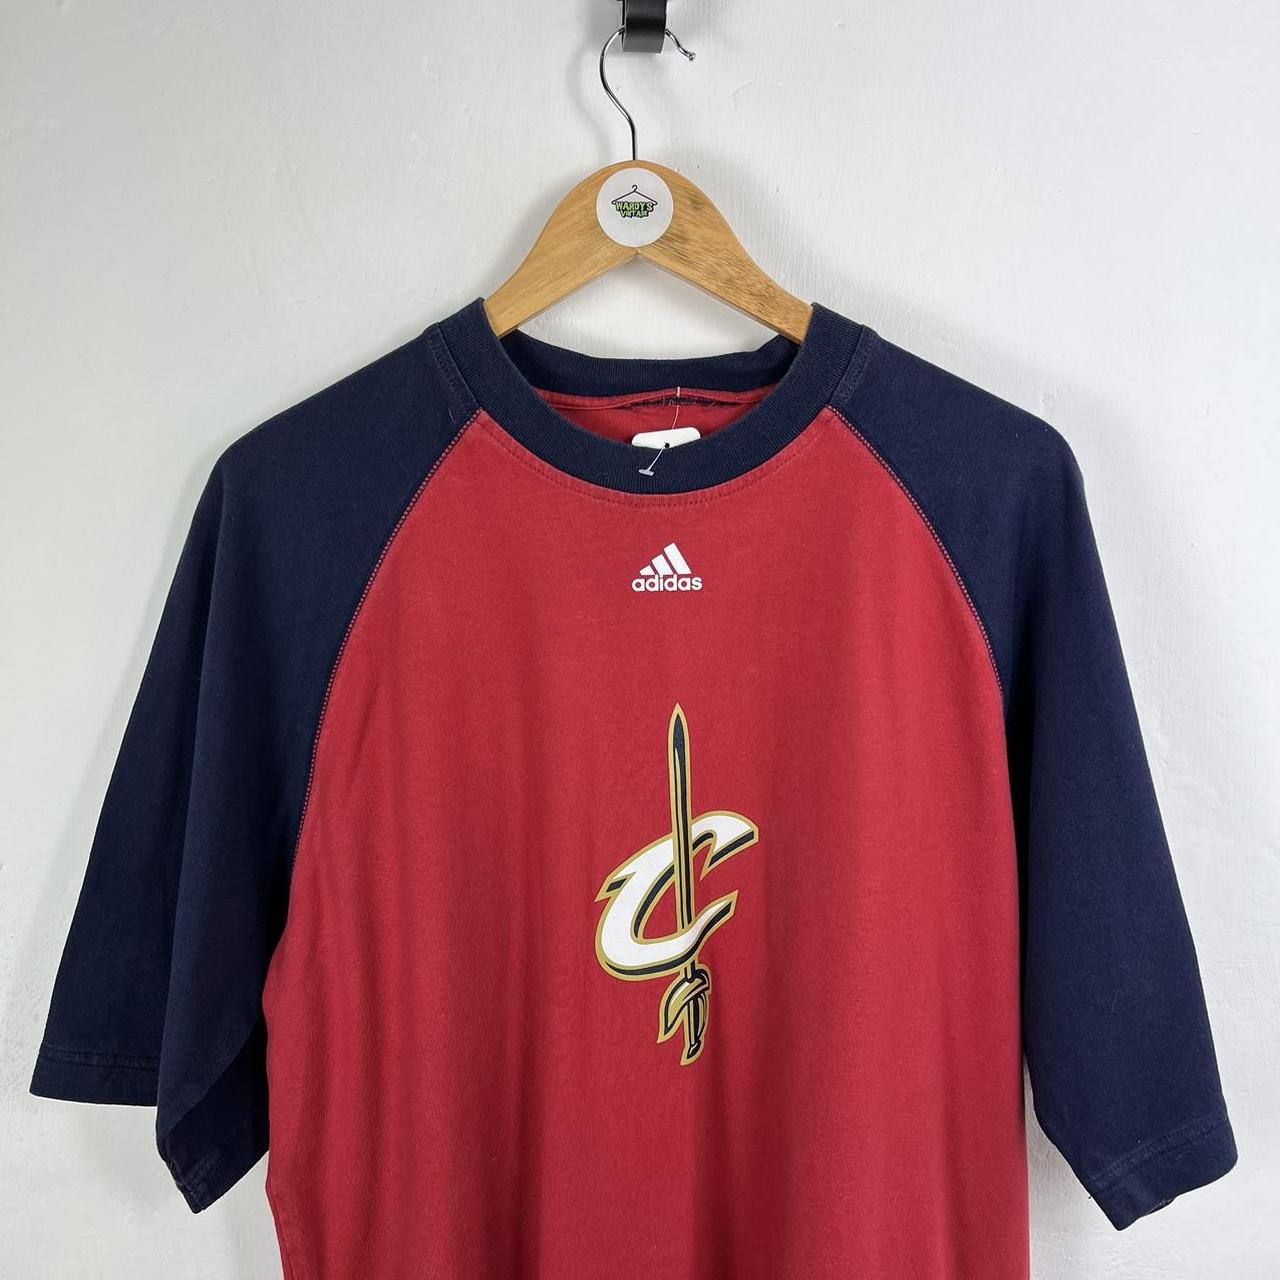 Adidas Cleveland cavaliers t shirt XL